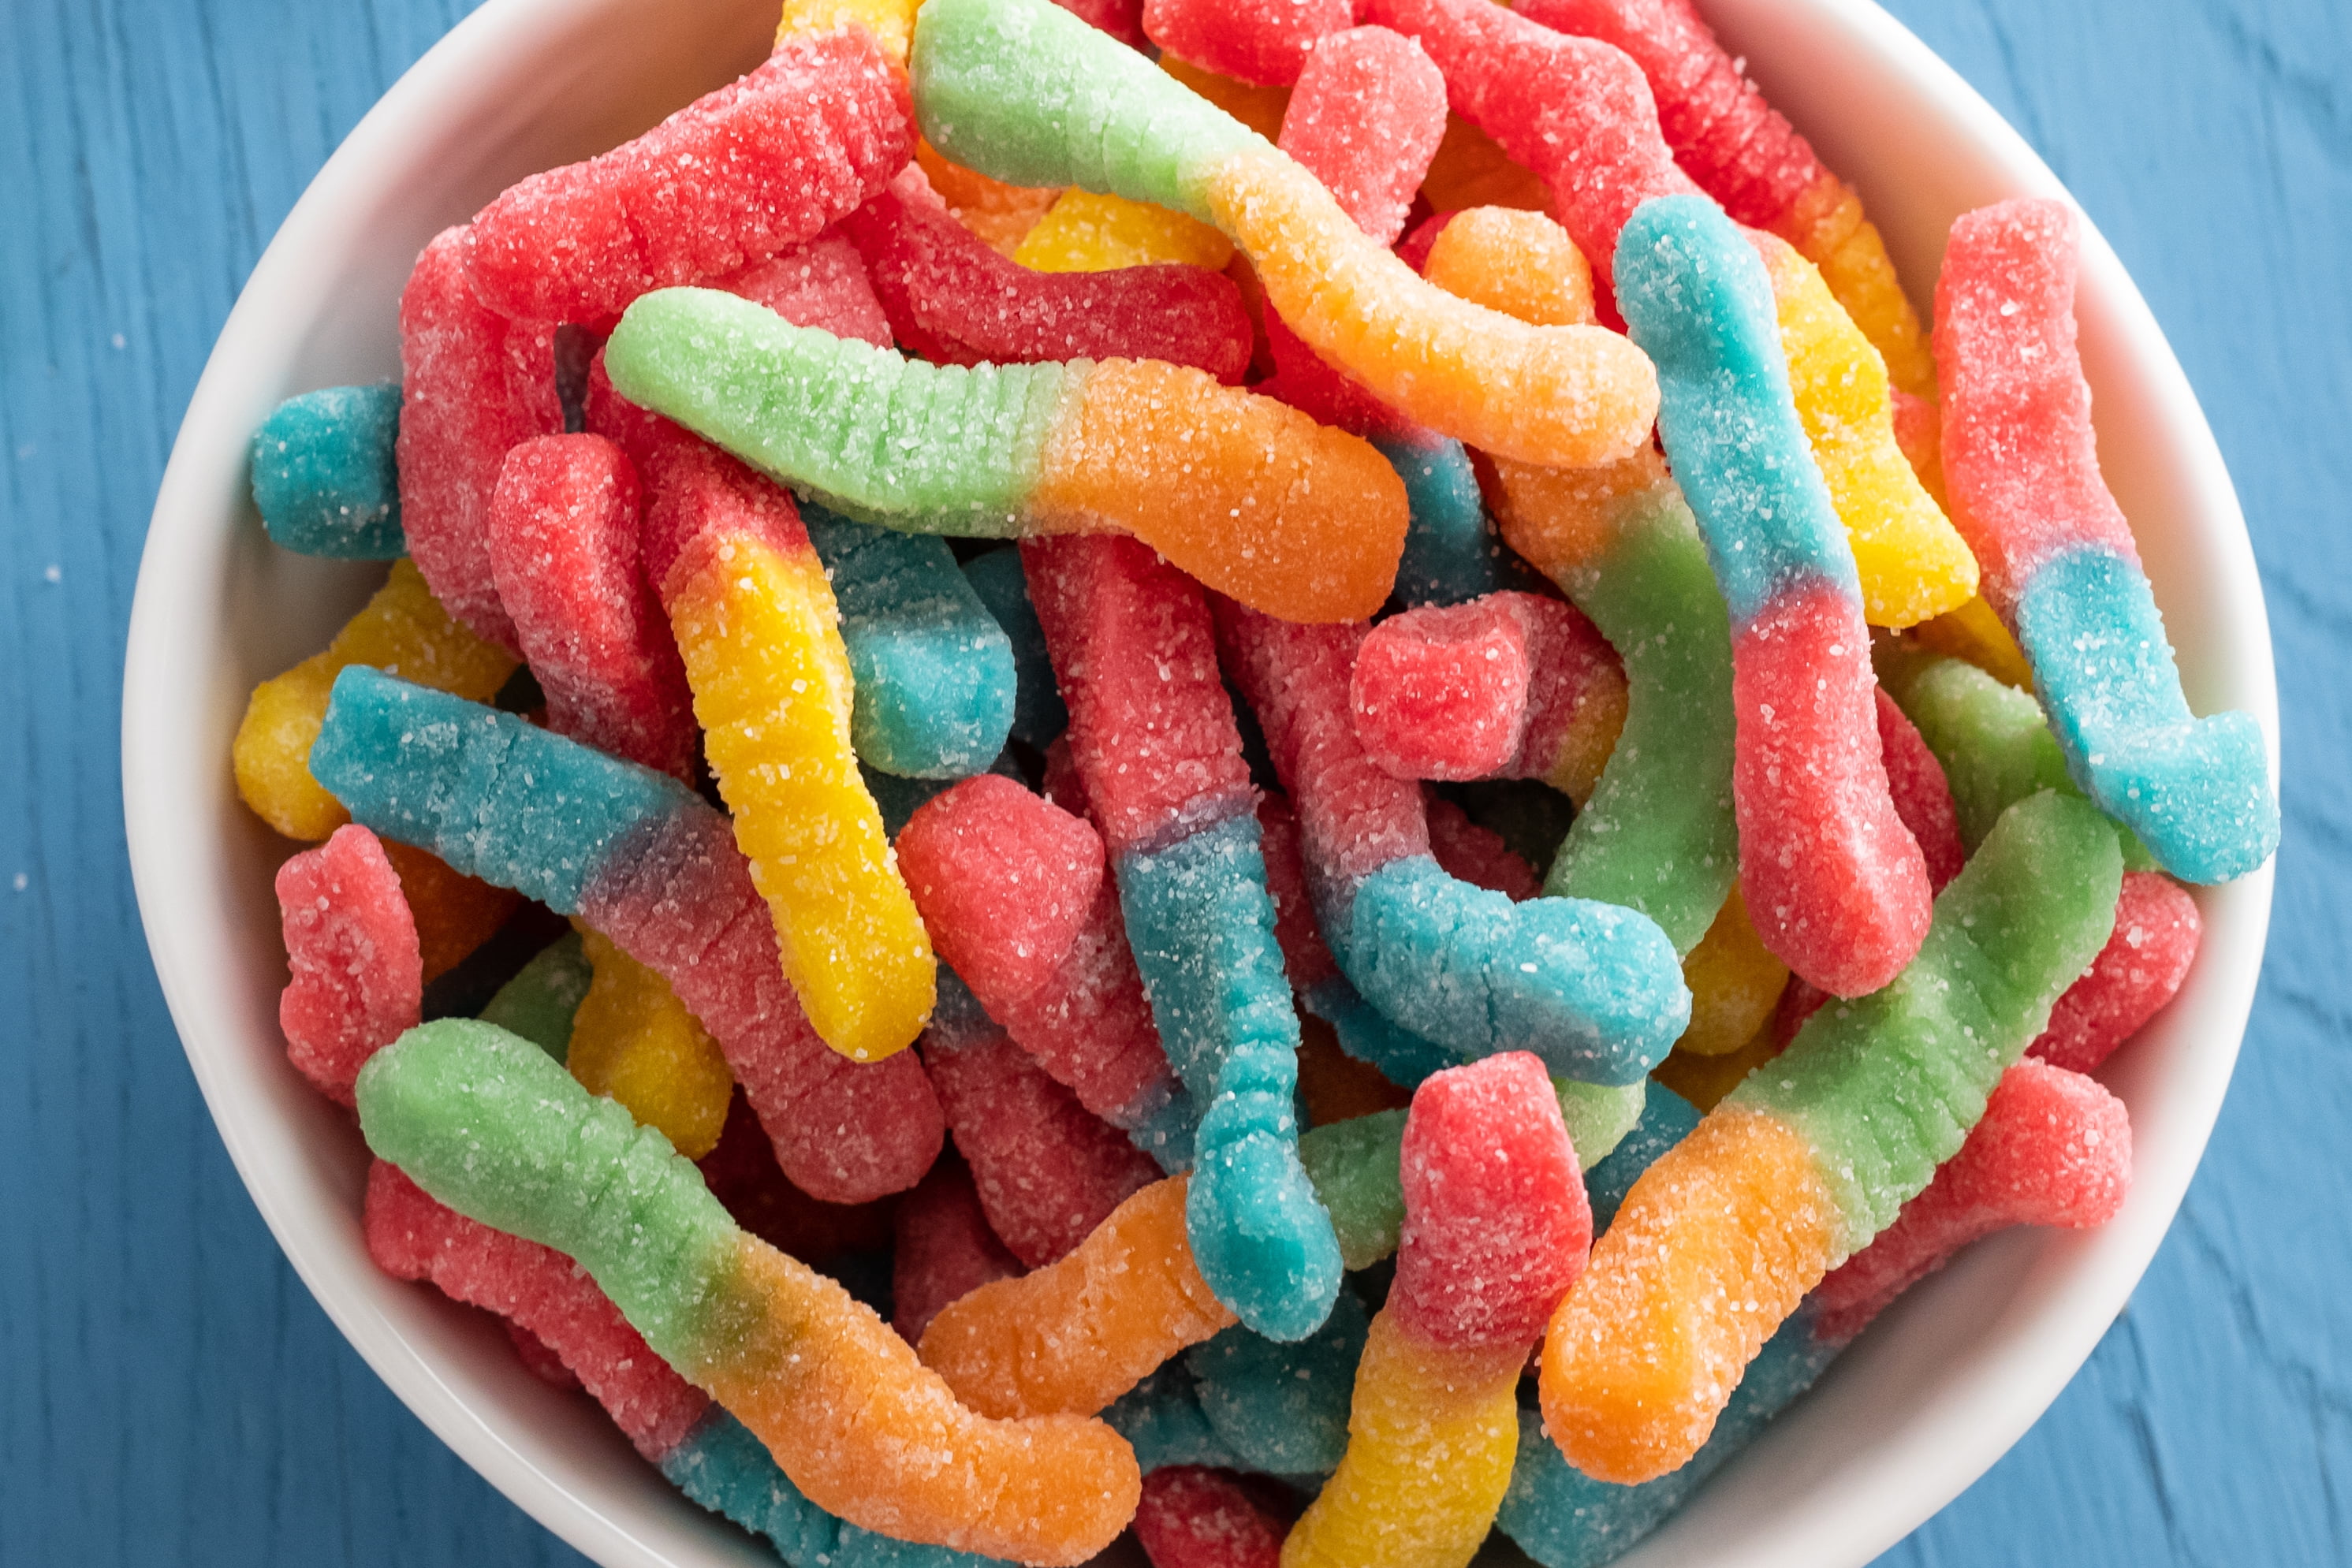 Trolli Sour Brite Crawlers Gummy Worms – Your Snack Box